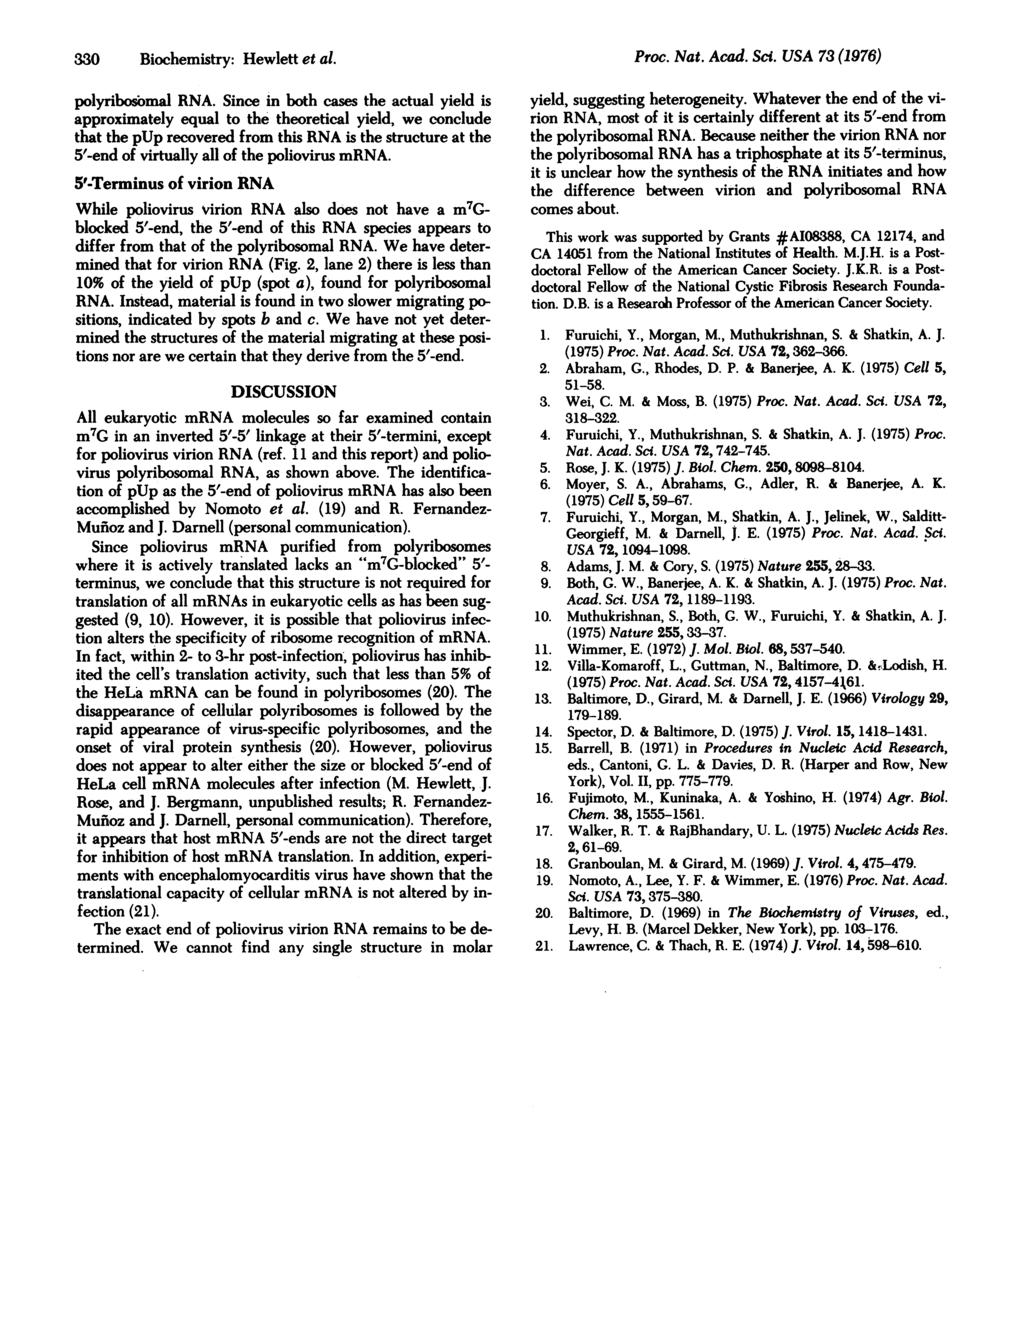 330 Biochemistry: Hewlett et al. polyribosimal RNA.